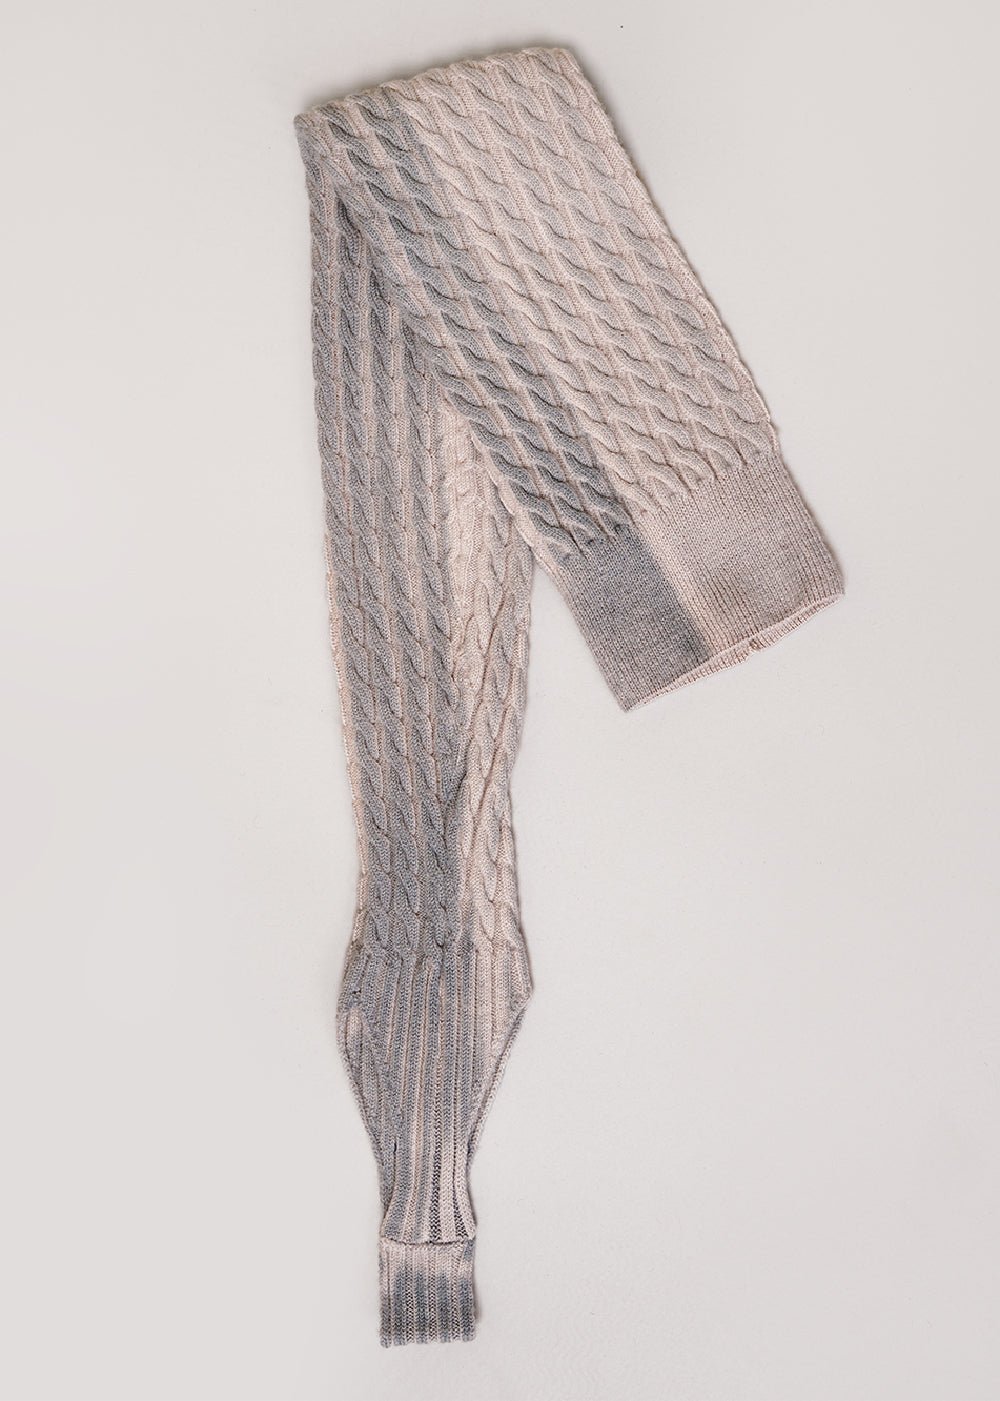 Boiled Wool Gray Leg Warmers, Felted Organic Wool Leggings, Knit